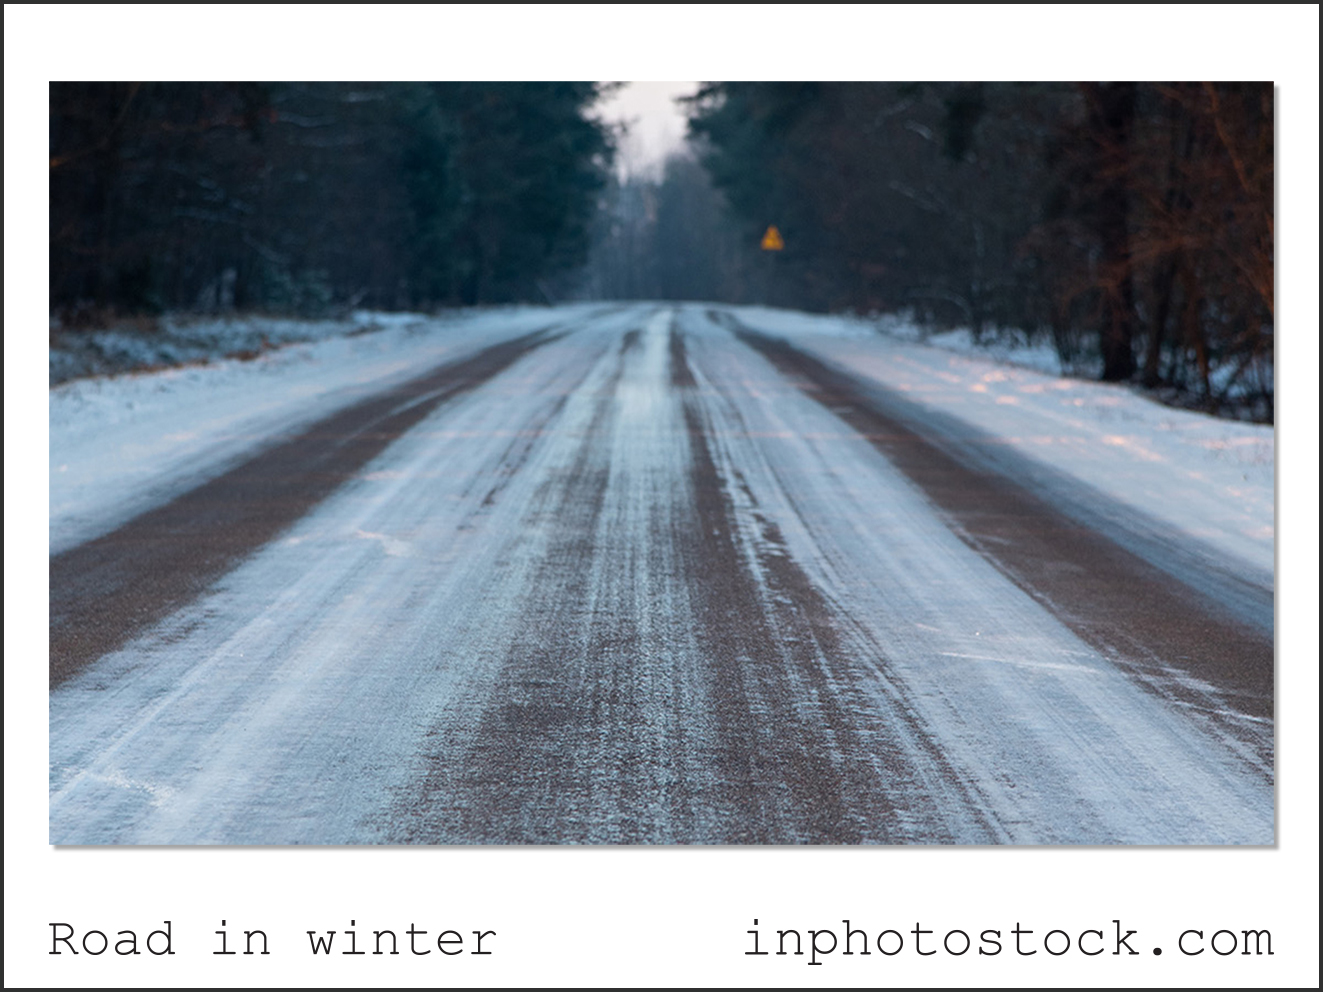 Road in winter photo stock